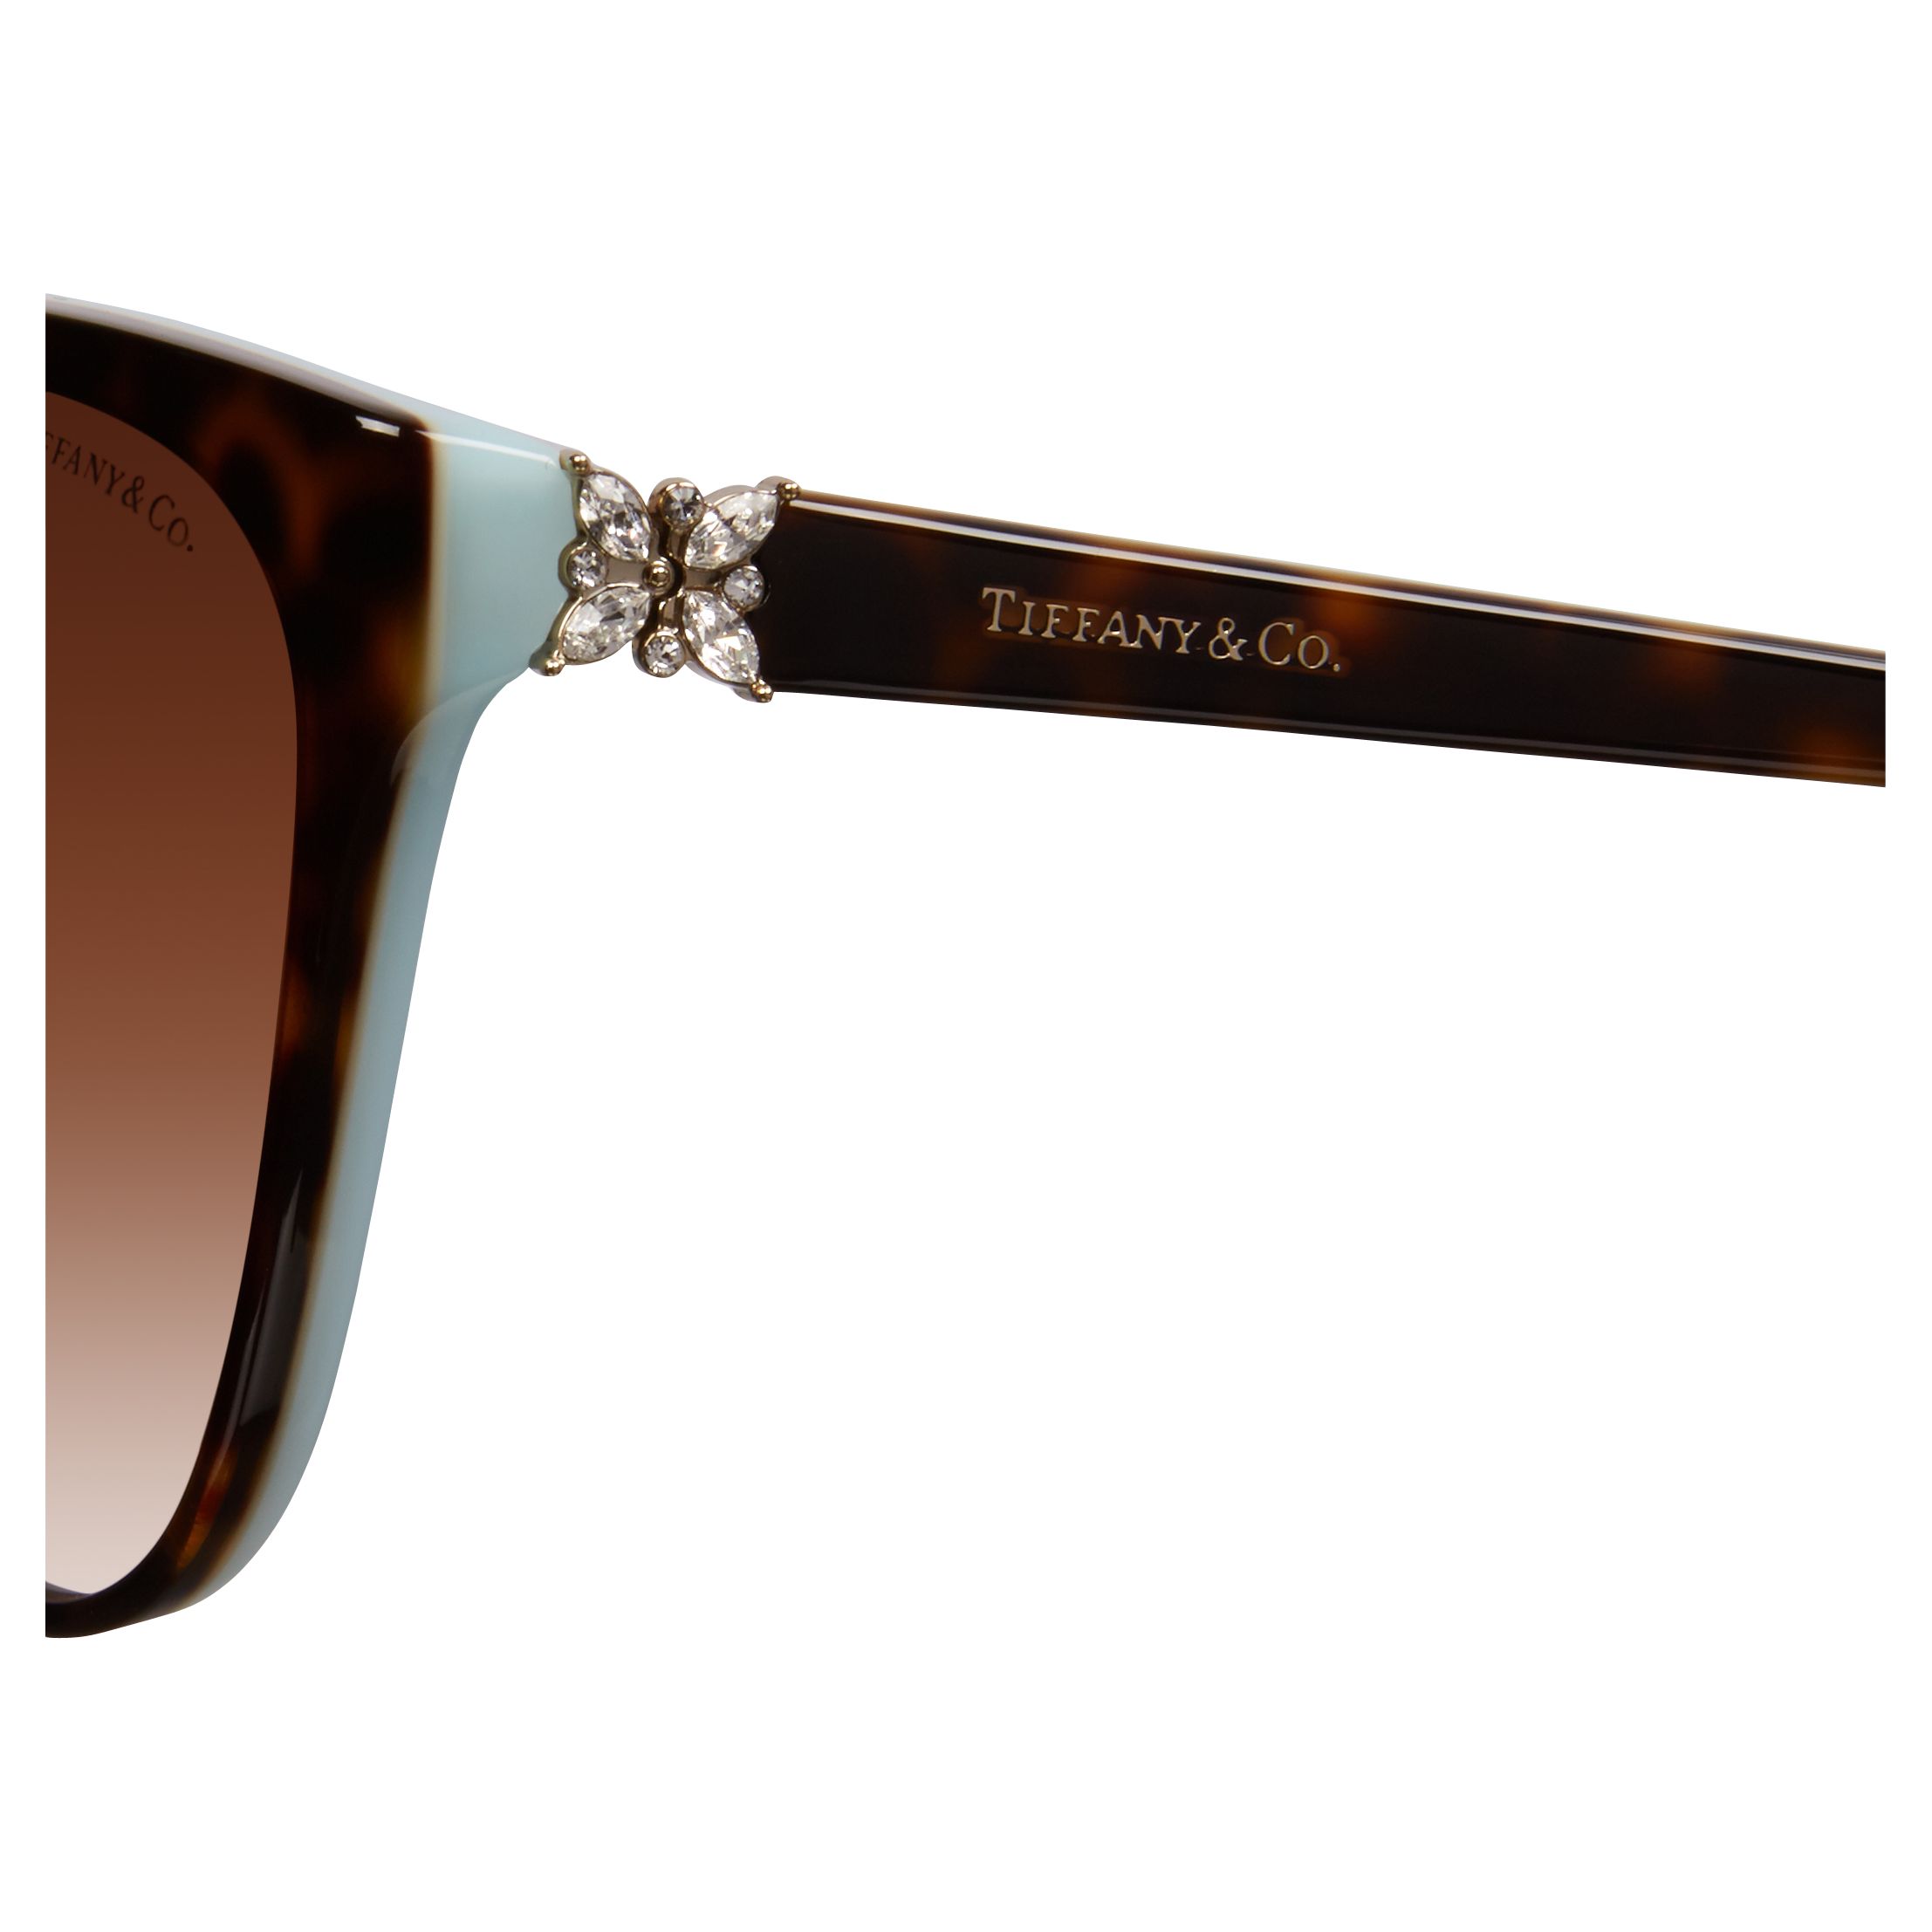 Buy Tiffany & Co TF4089B Cat's Eye Sunglasses Online at johnlewis.com